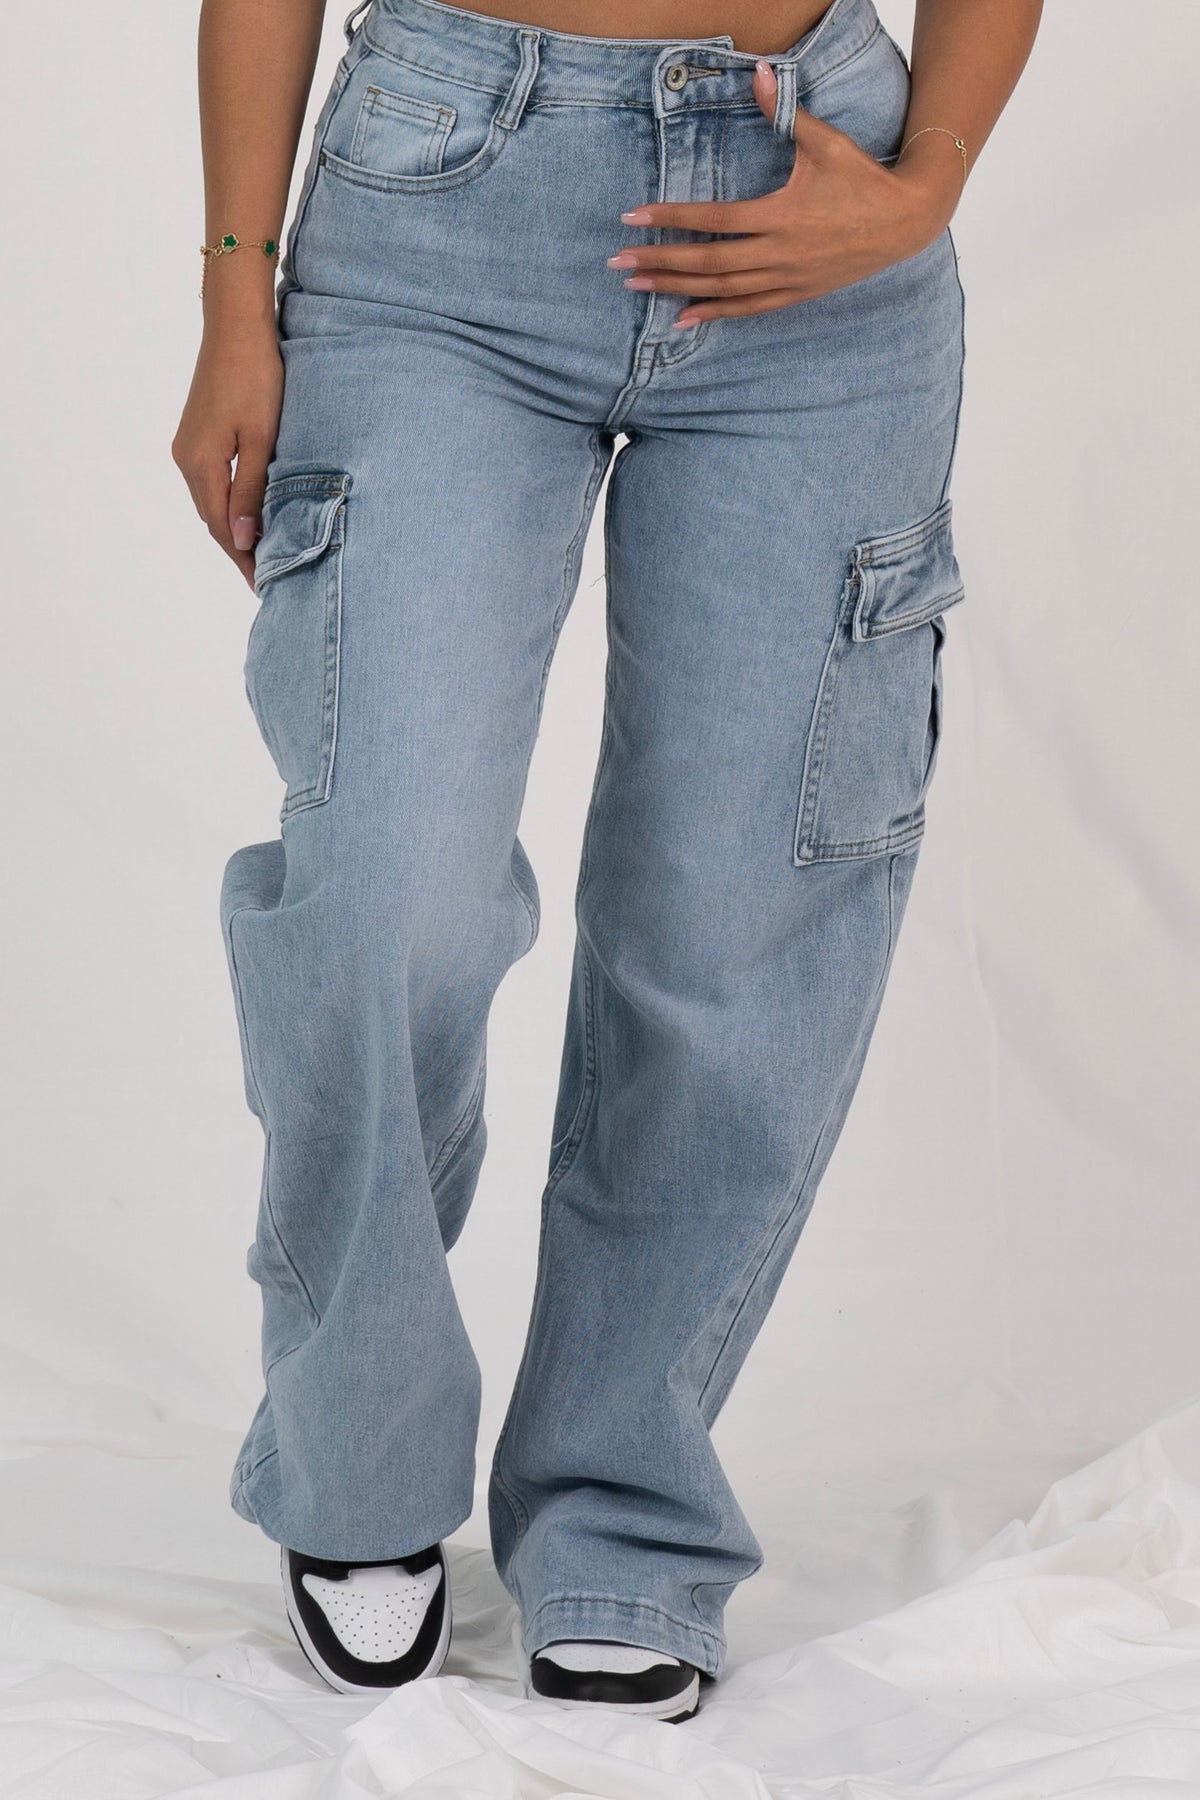 Denim Cargo Pants | jeans cargo | the girl wearing 